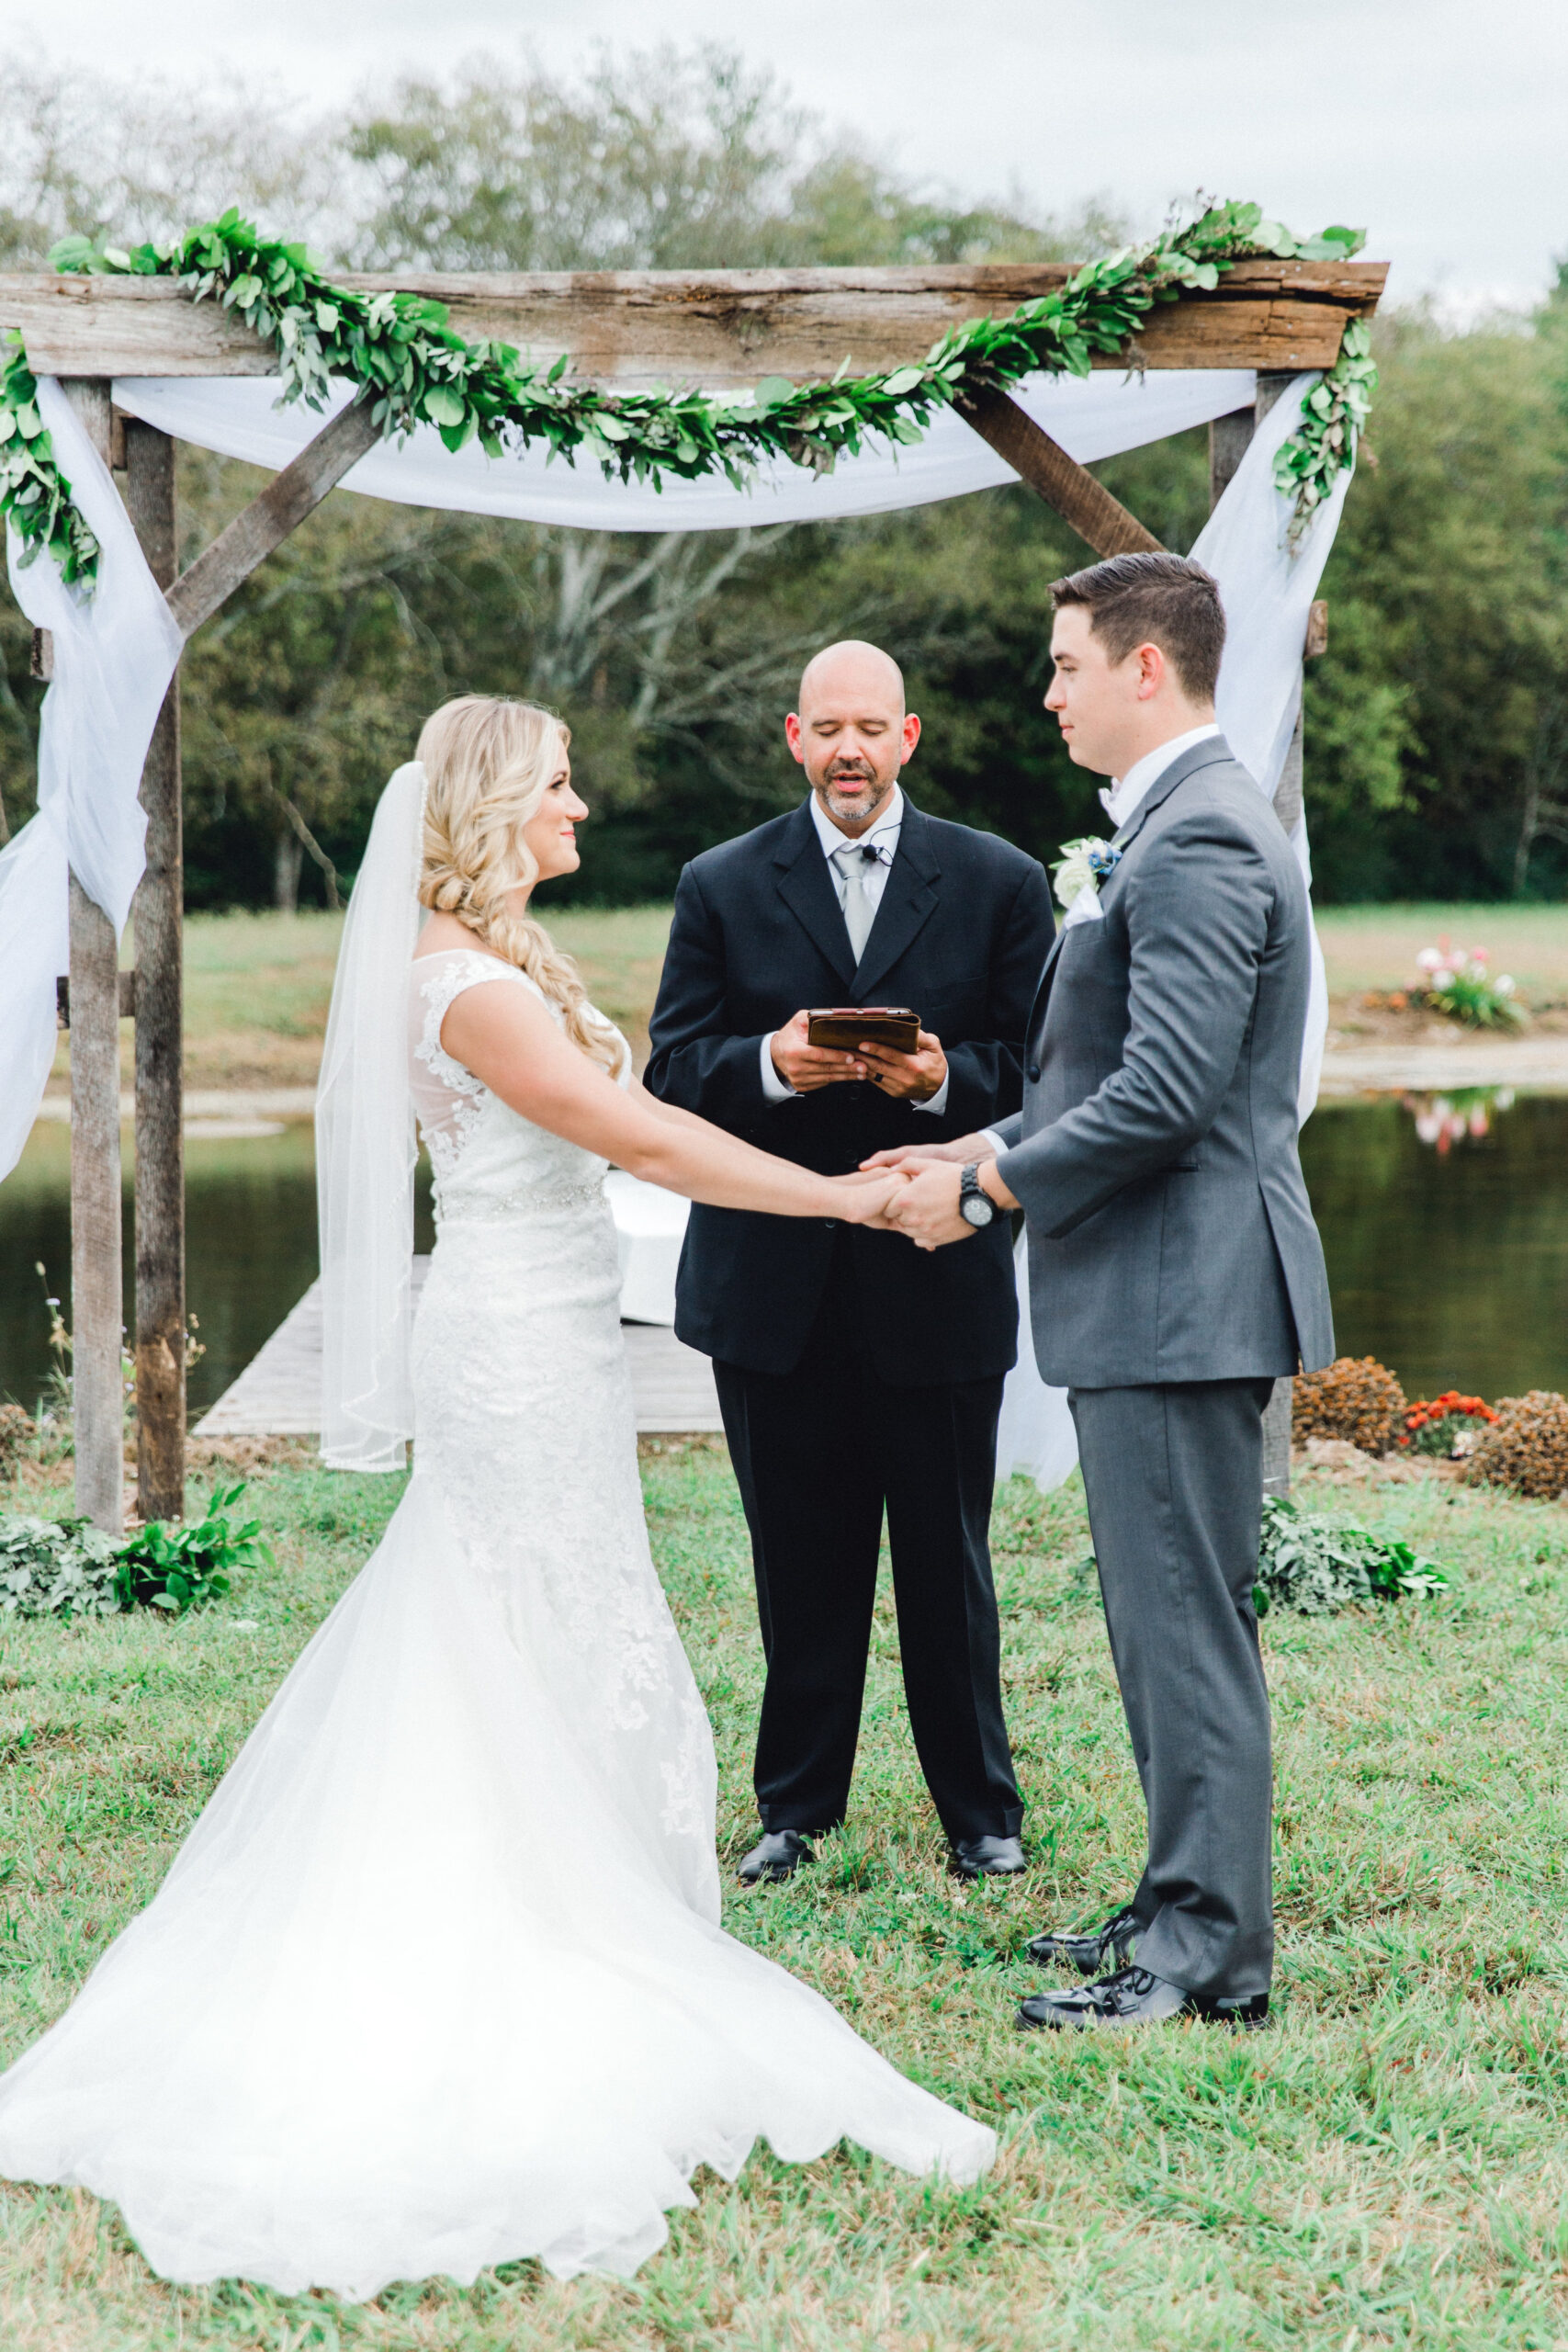 Paige-Mercer-Photography-Florida-Wedding-Photographer-Alyssa&Drew-45.jpg